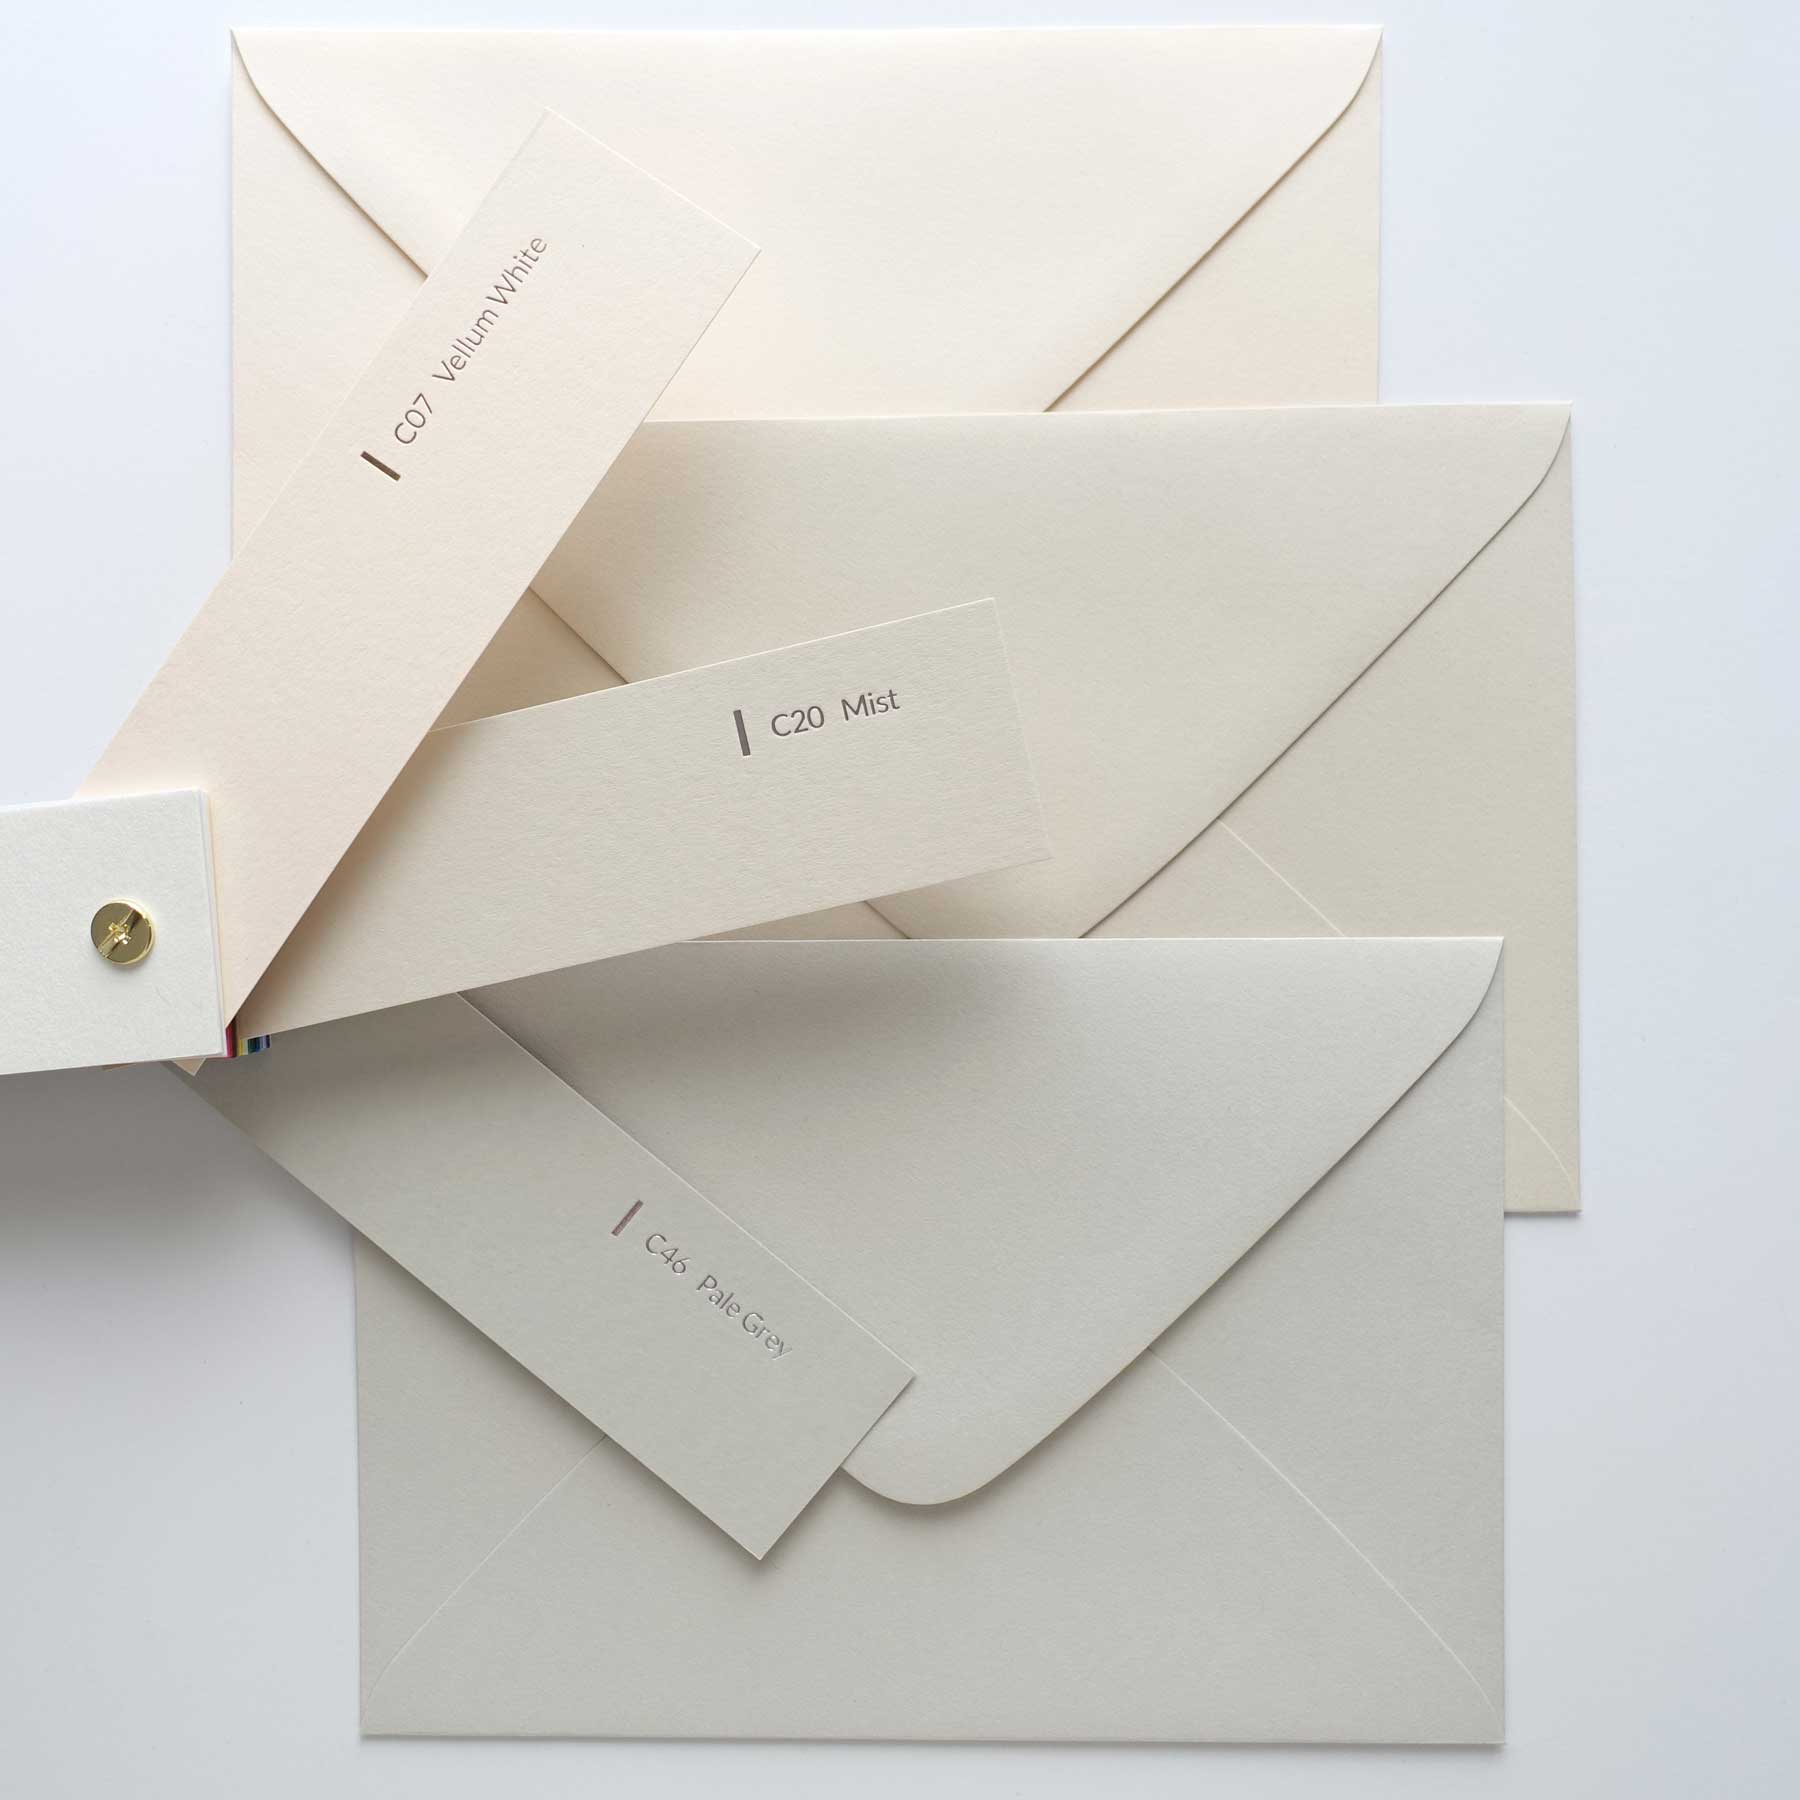 Assorted envelopes bundle pack Colorplan mist vellum white pale grey Australia